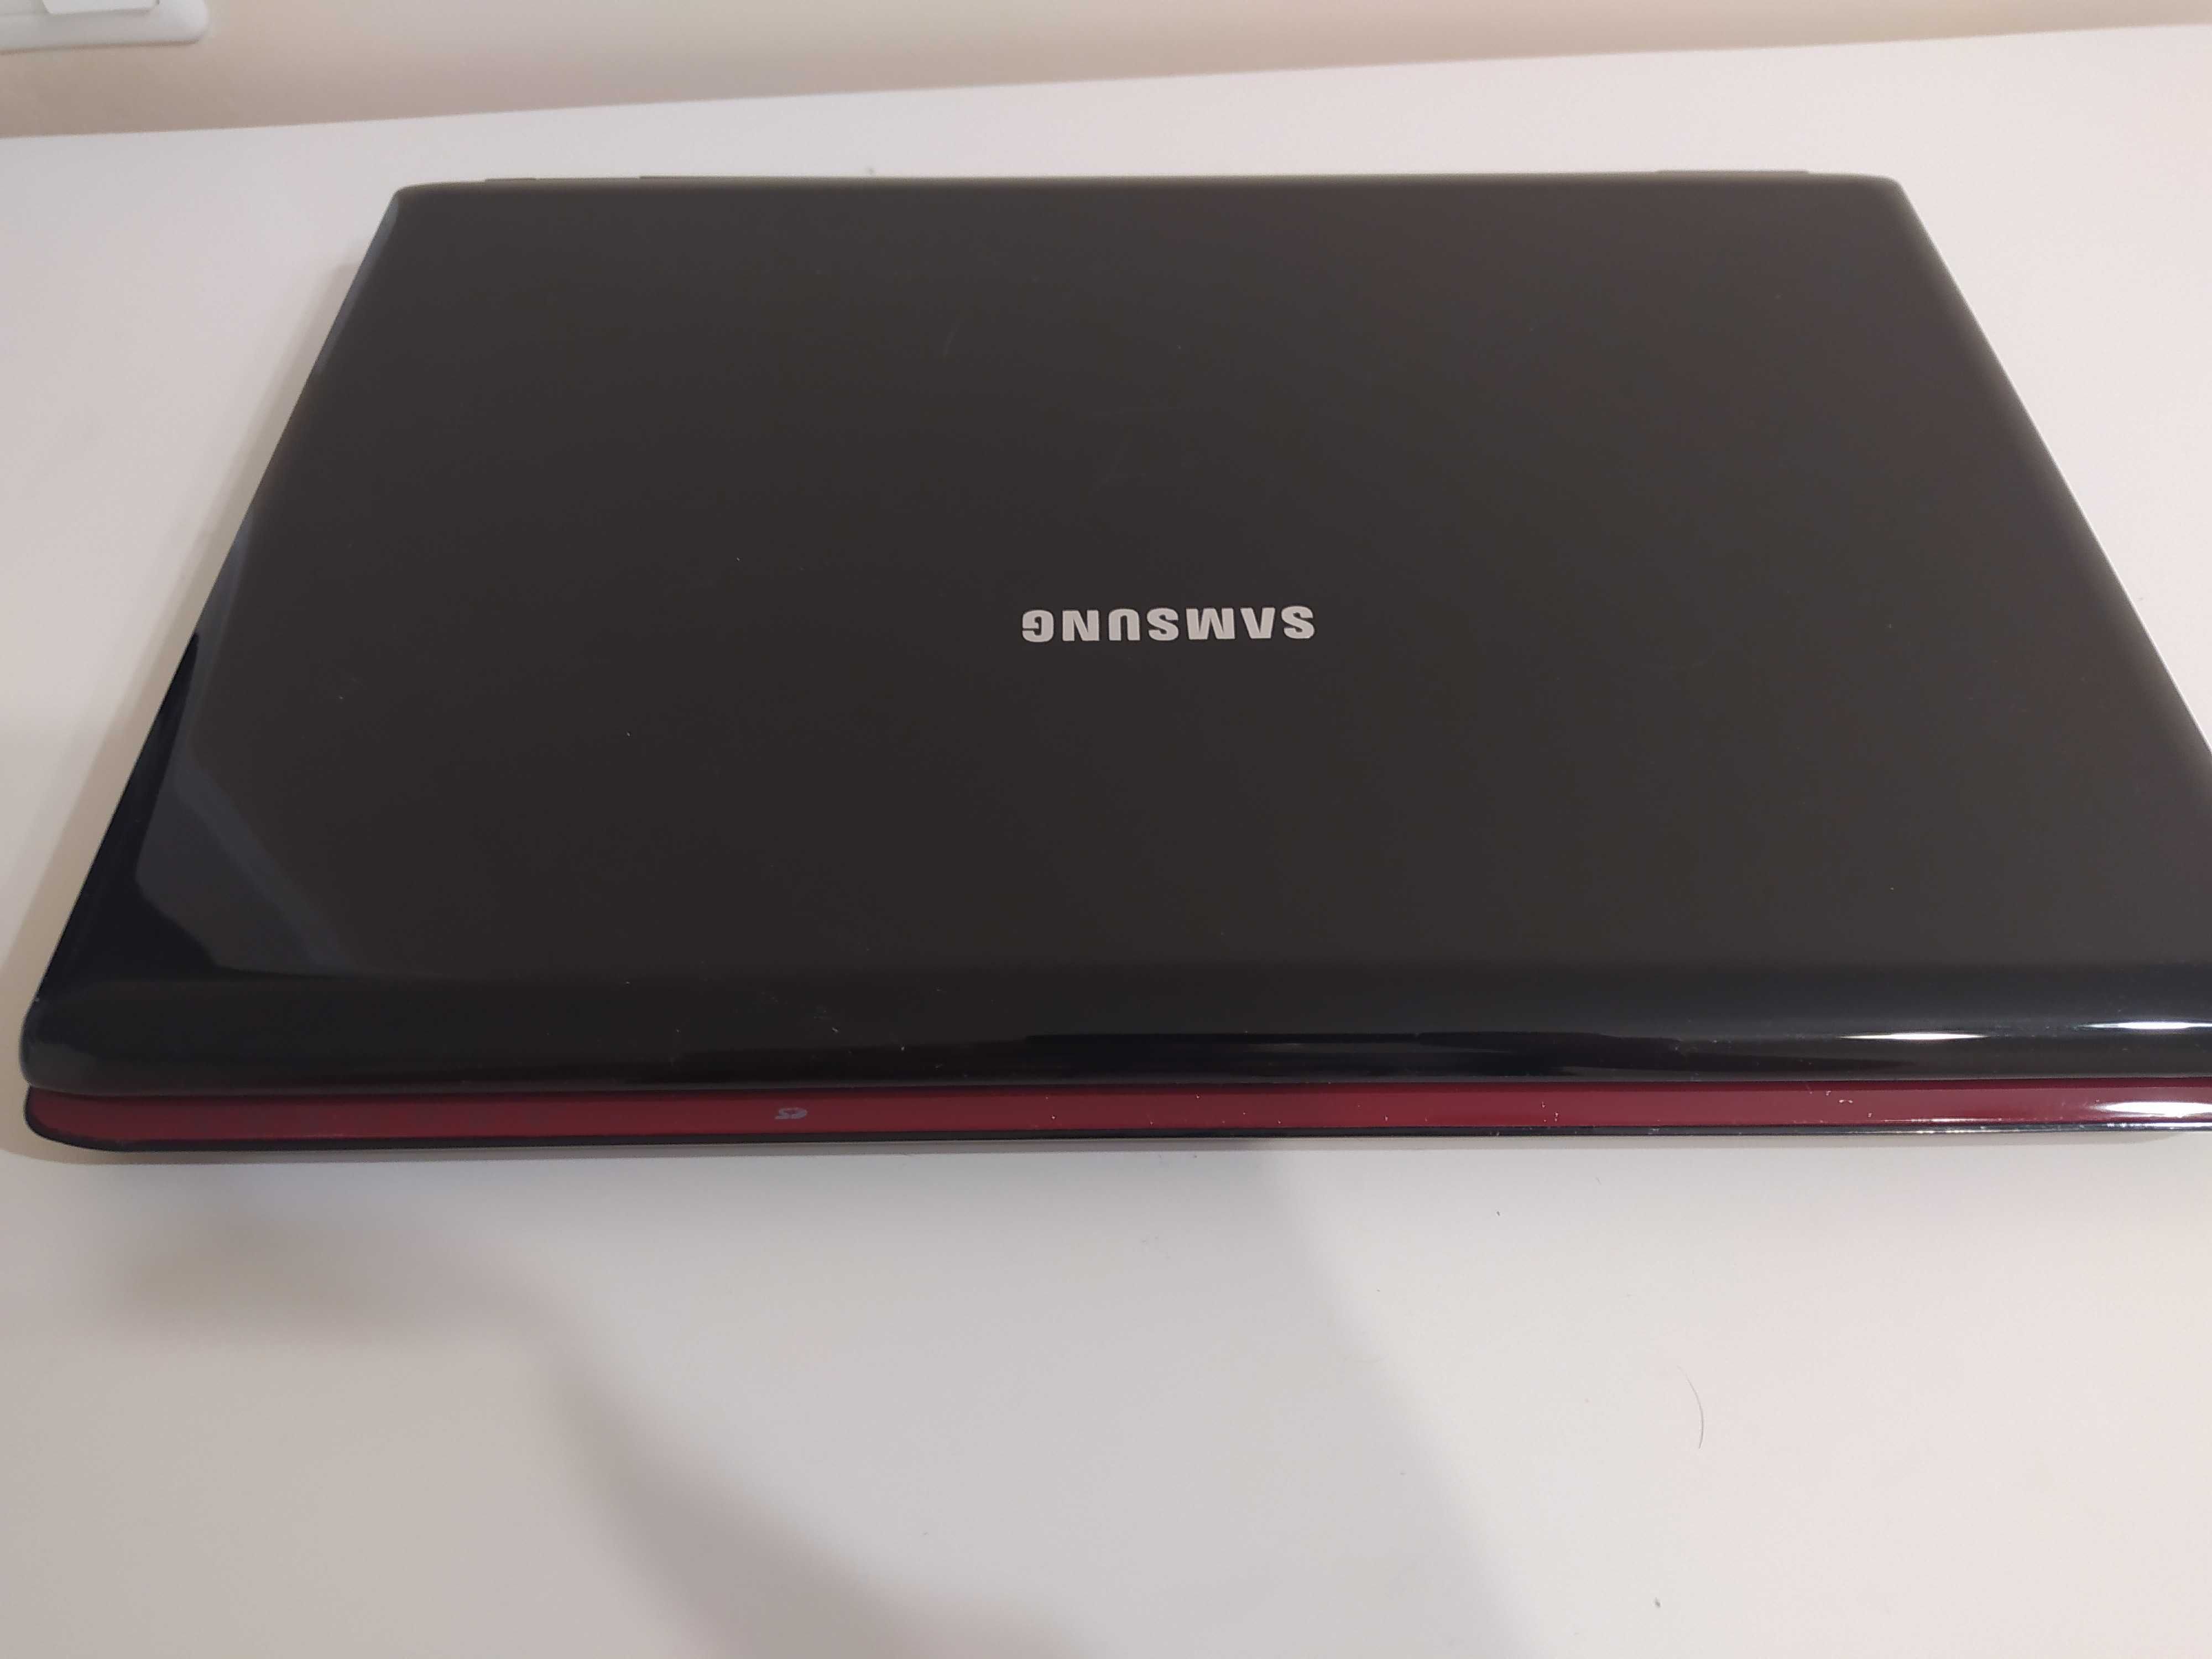 Laptop Samsung r610 + zasilacz